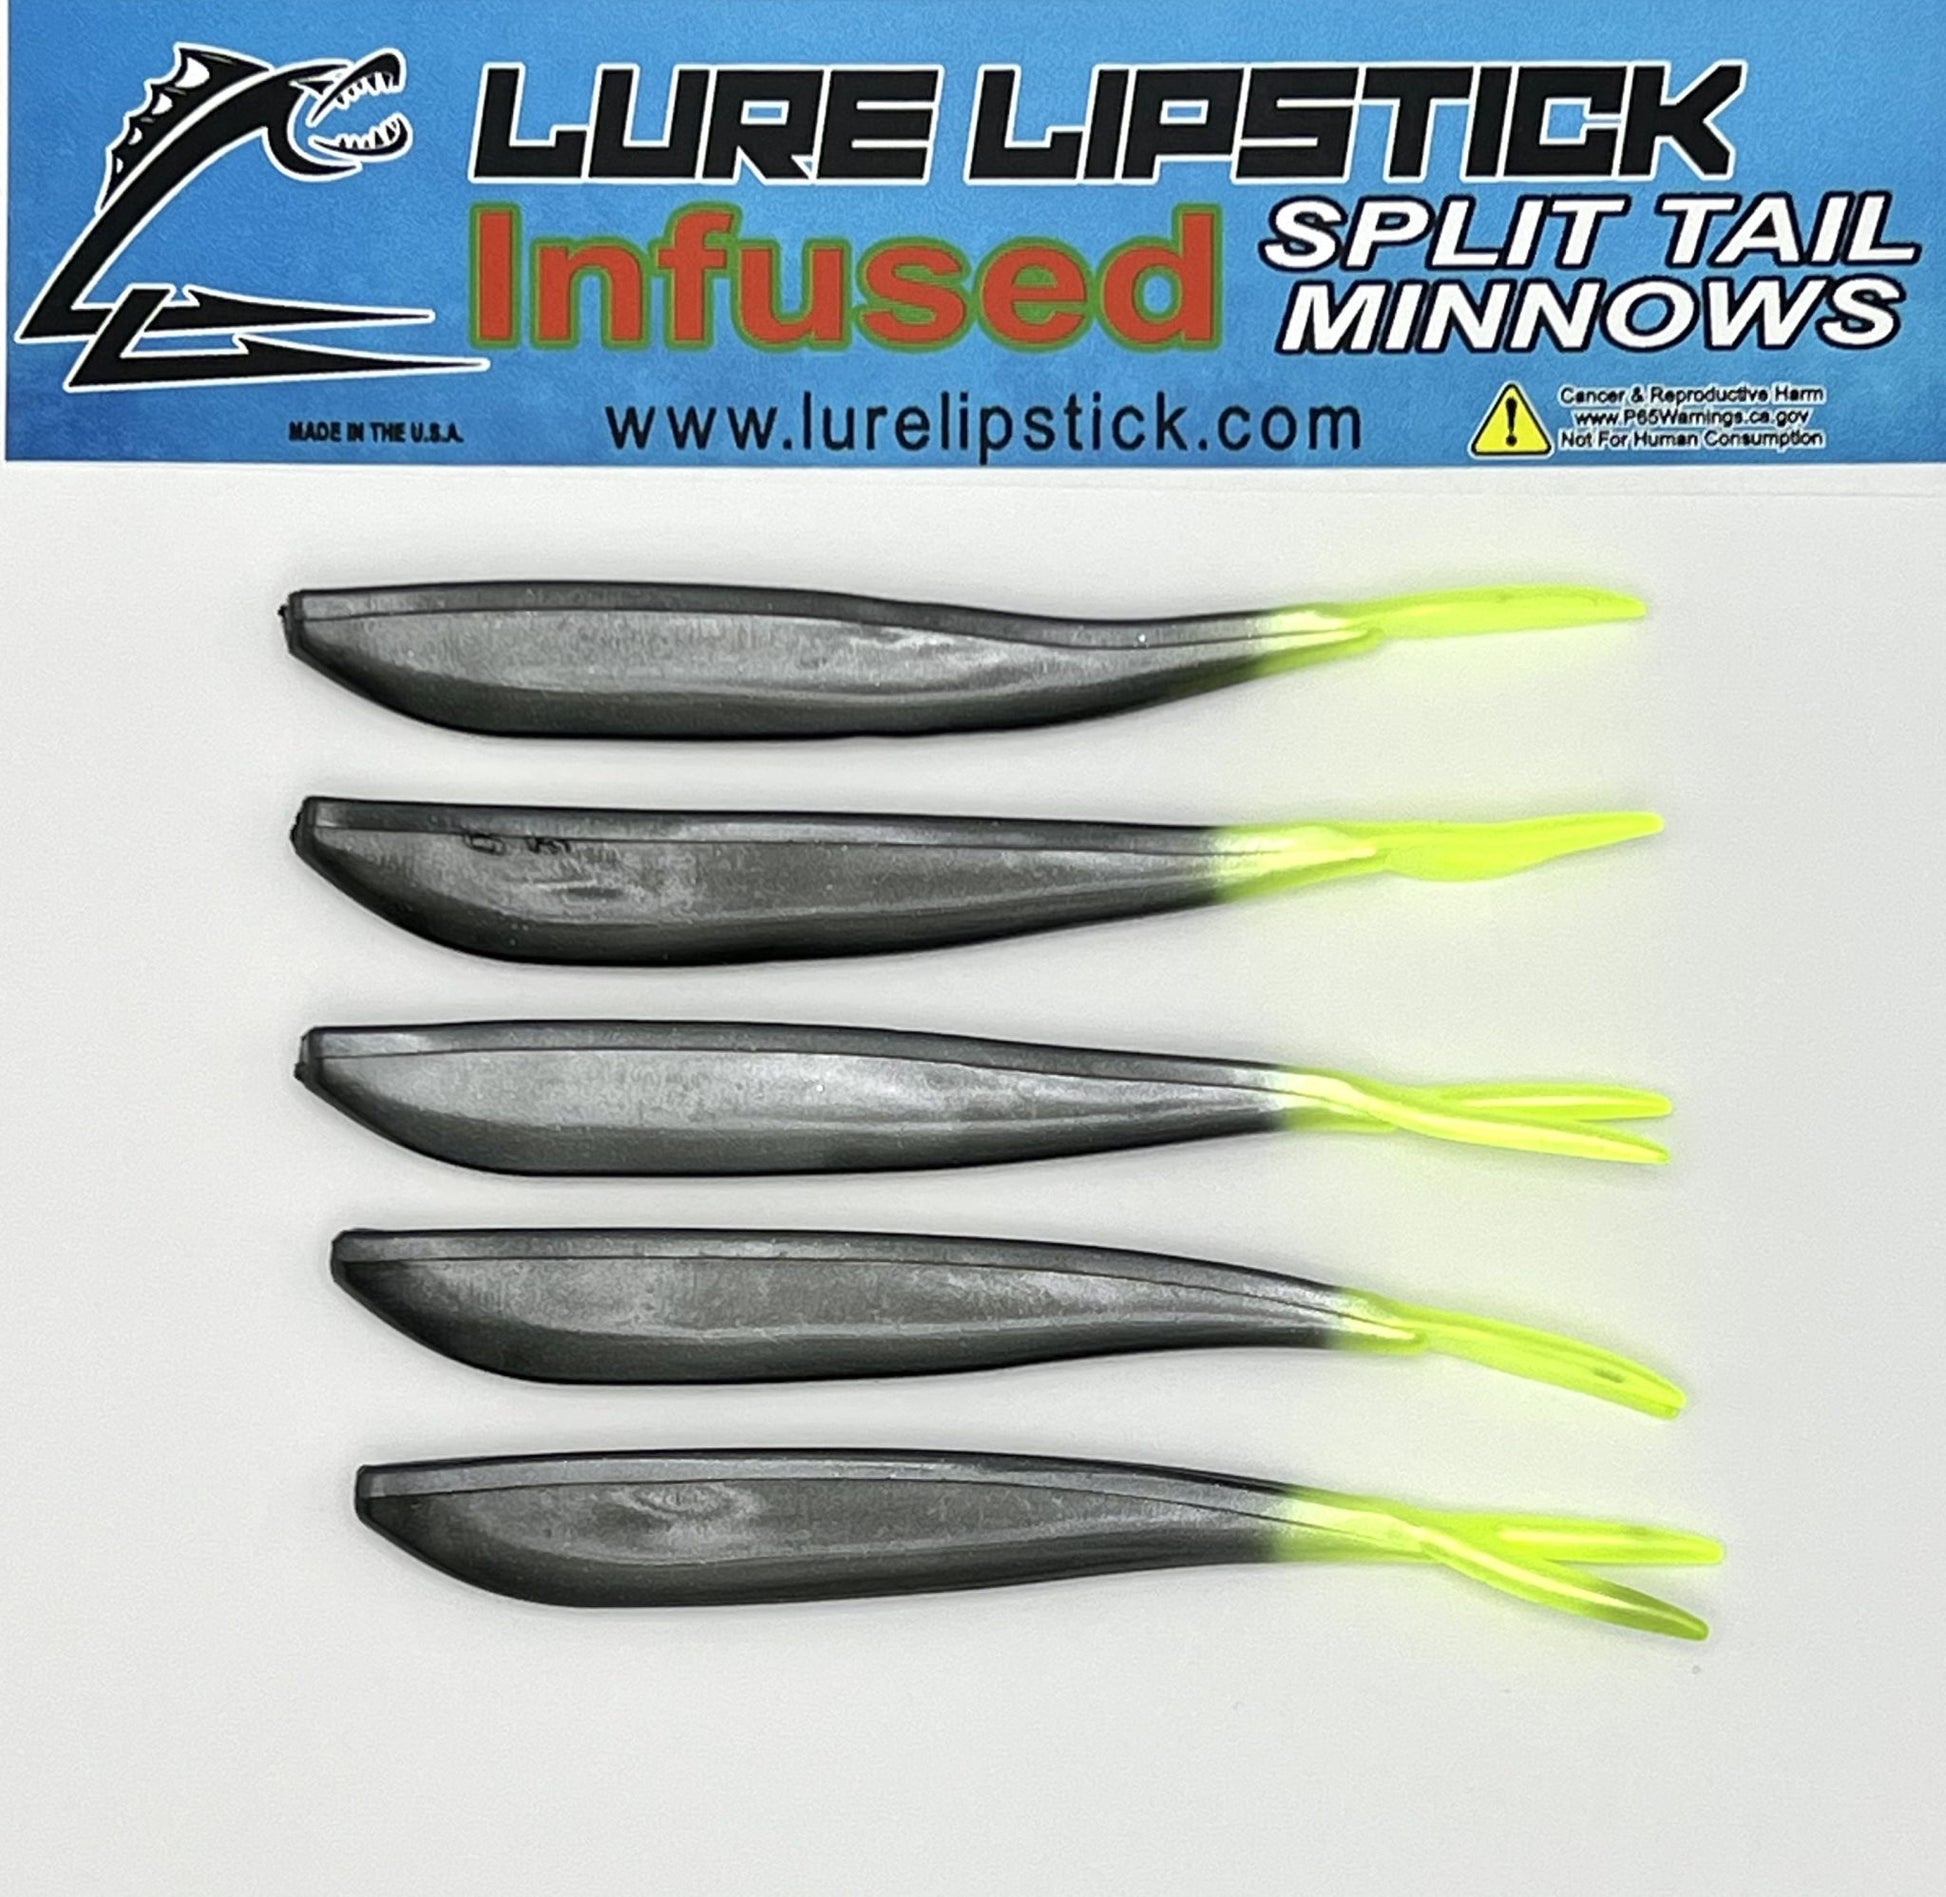 Aluminum Injection Bait Mold, 4 inch Fork Tail Minnow - Split Tail Minnow